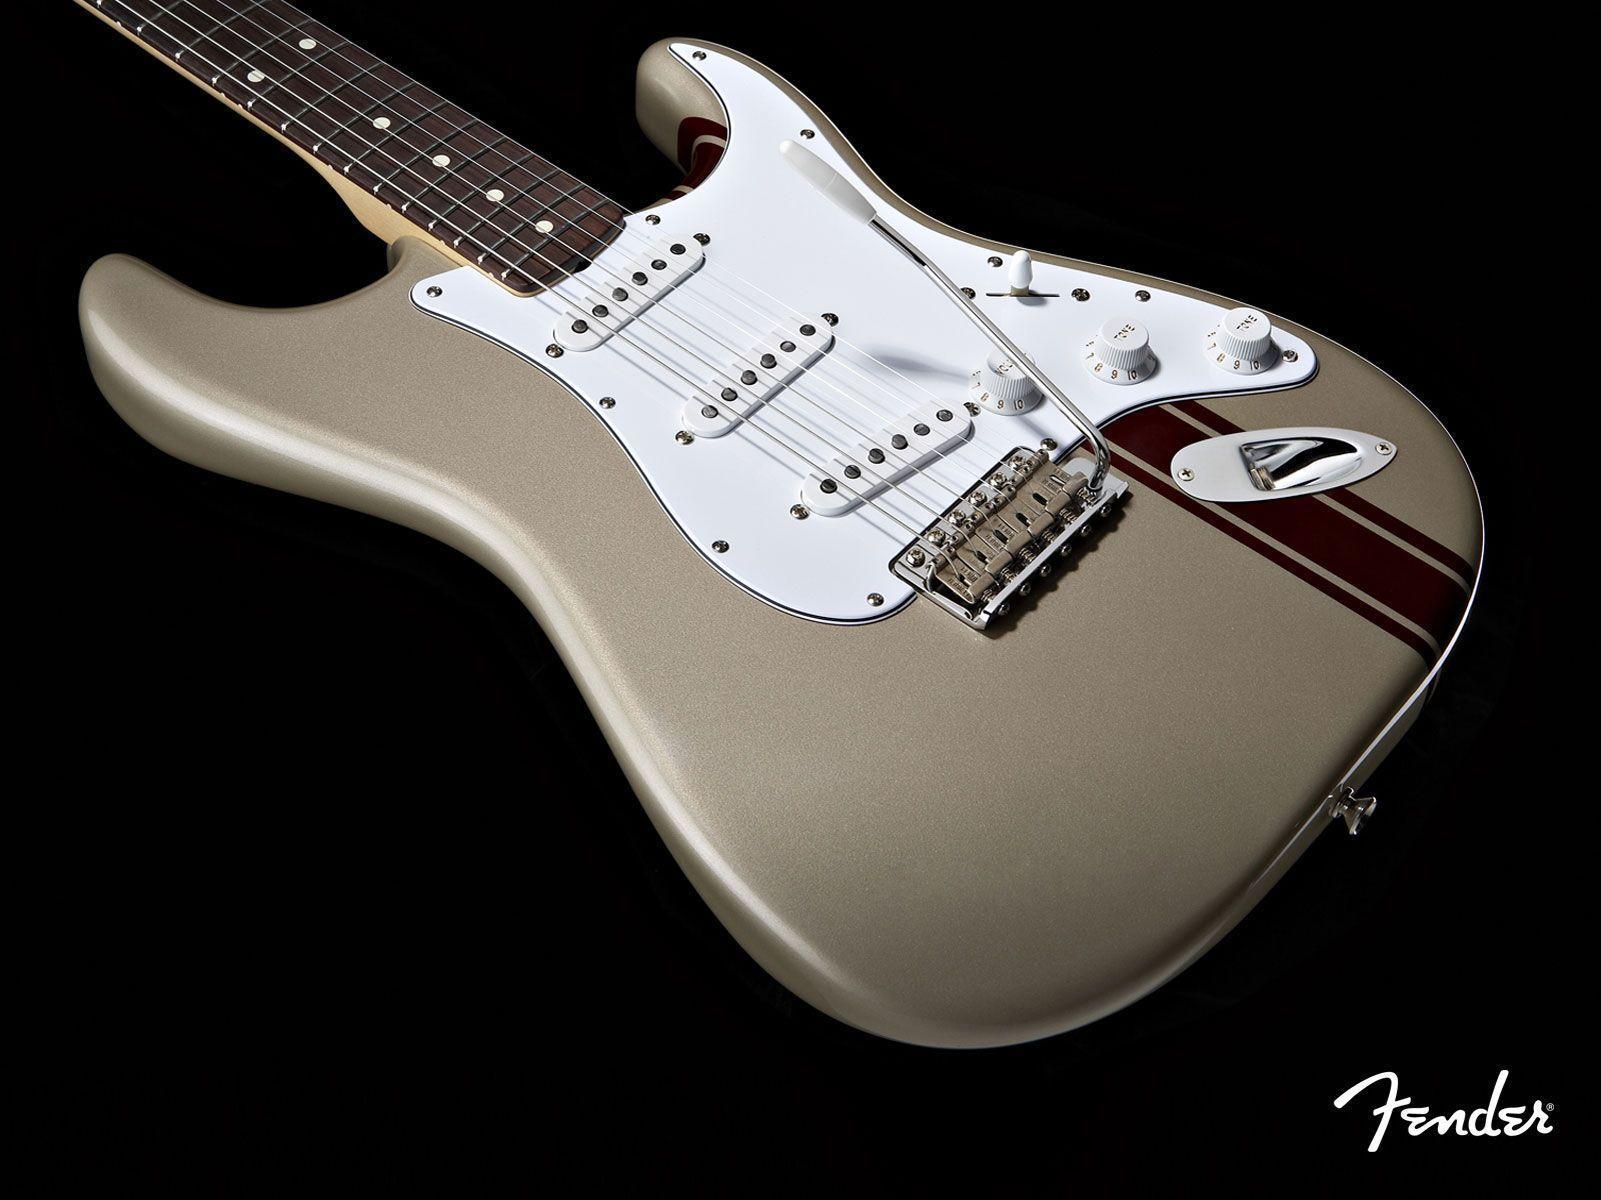 Fender Stratocaster Wallpaper By Cmdry72. Wallsev